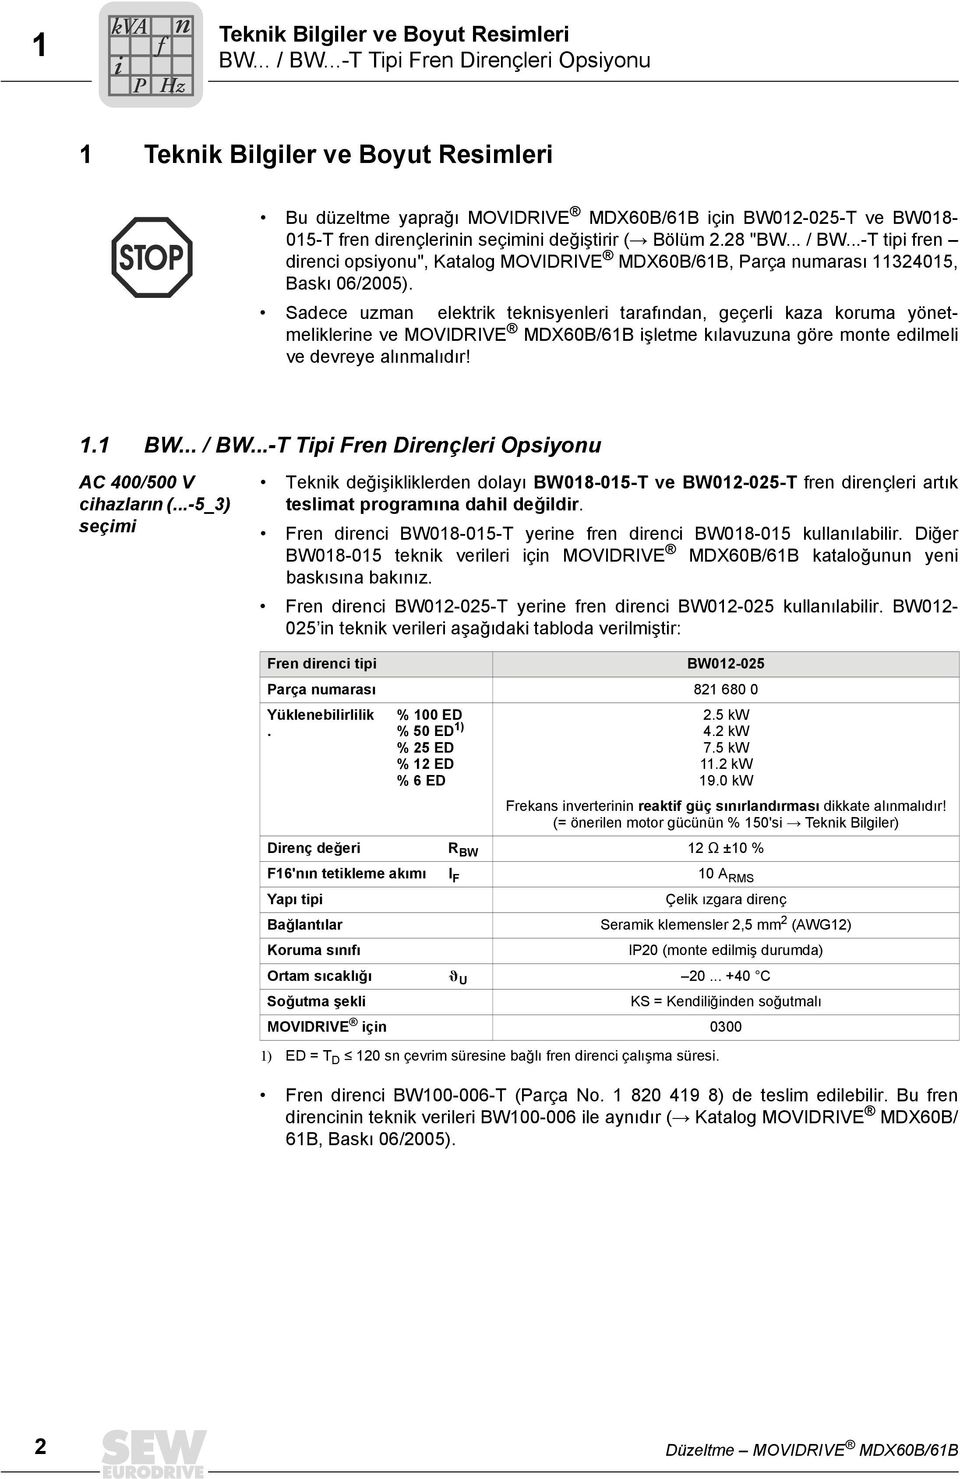 28 "BW... / BW...-T tipi fren direnci opsiyonu", Katalog MOVIDRIVE MDX60B/61B, Parça numarası 11324015, Baskı 06/2005).